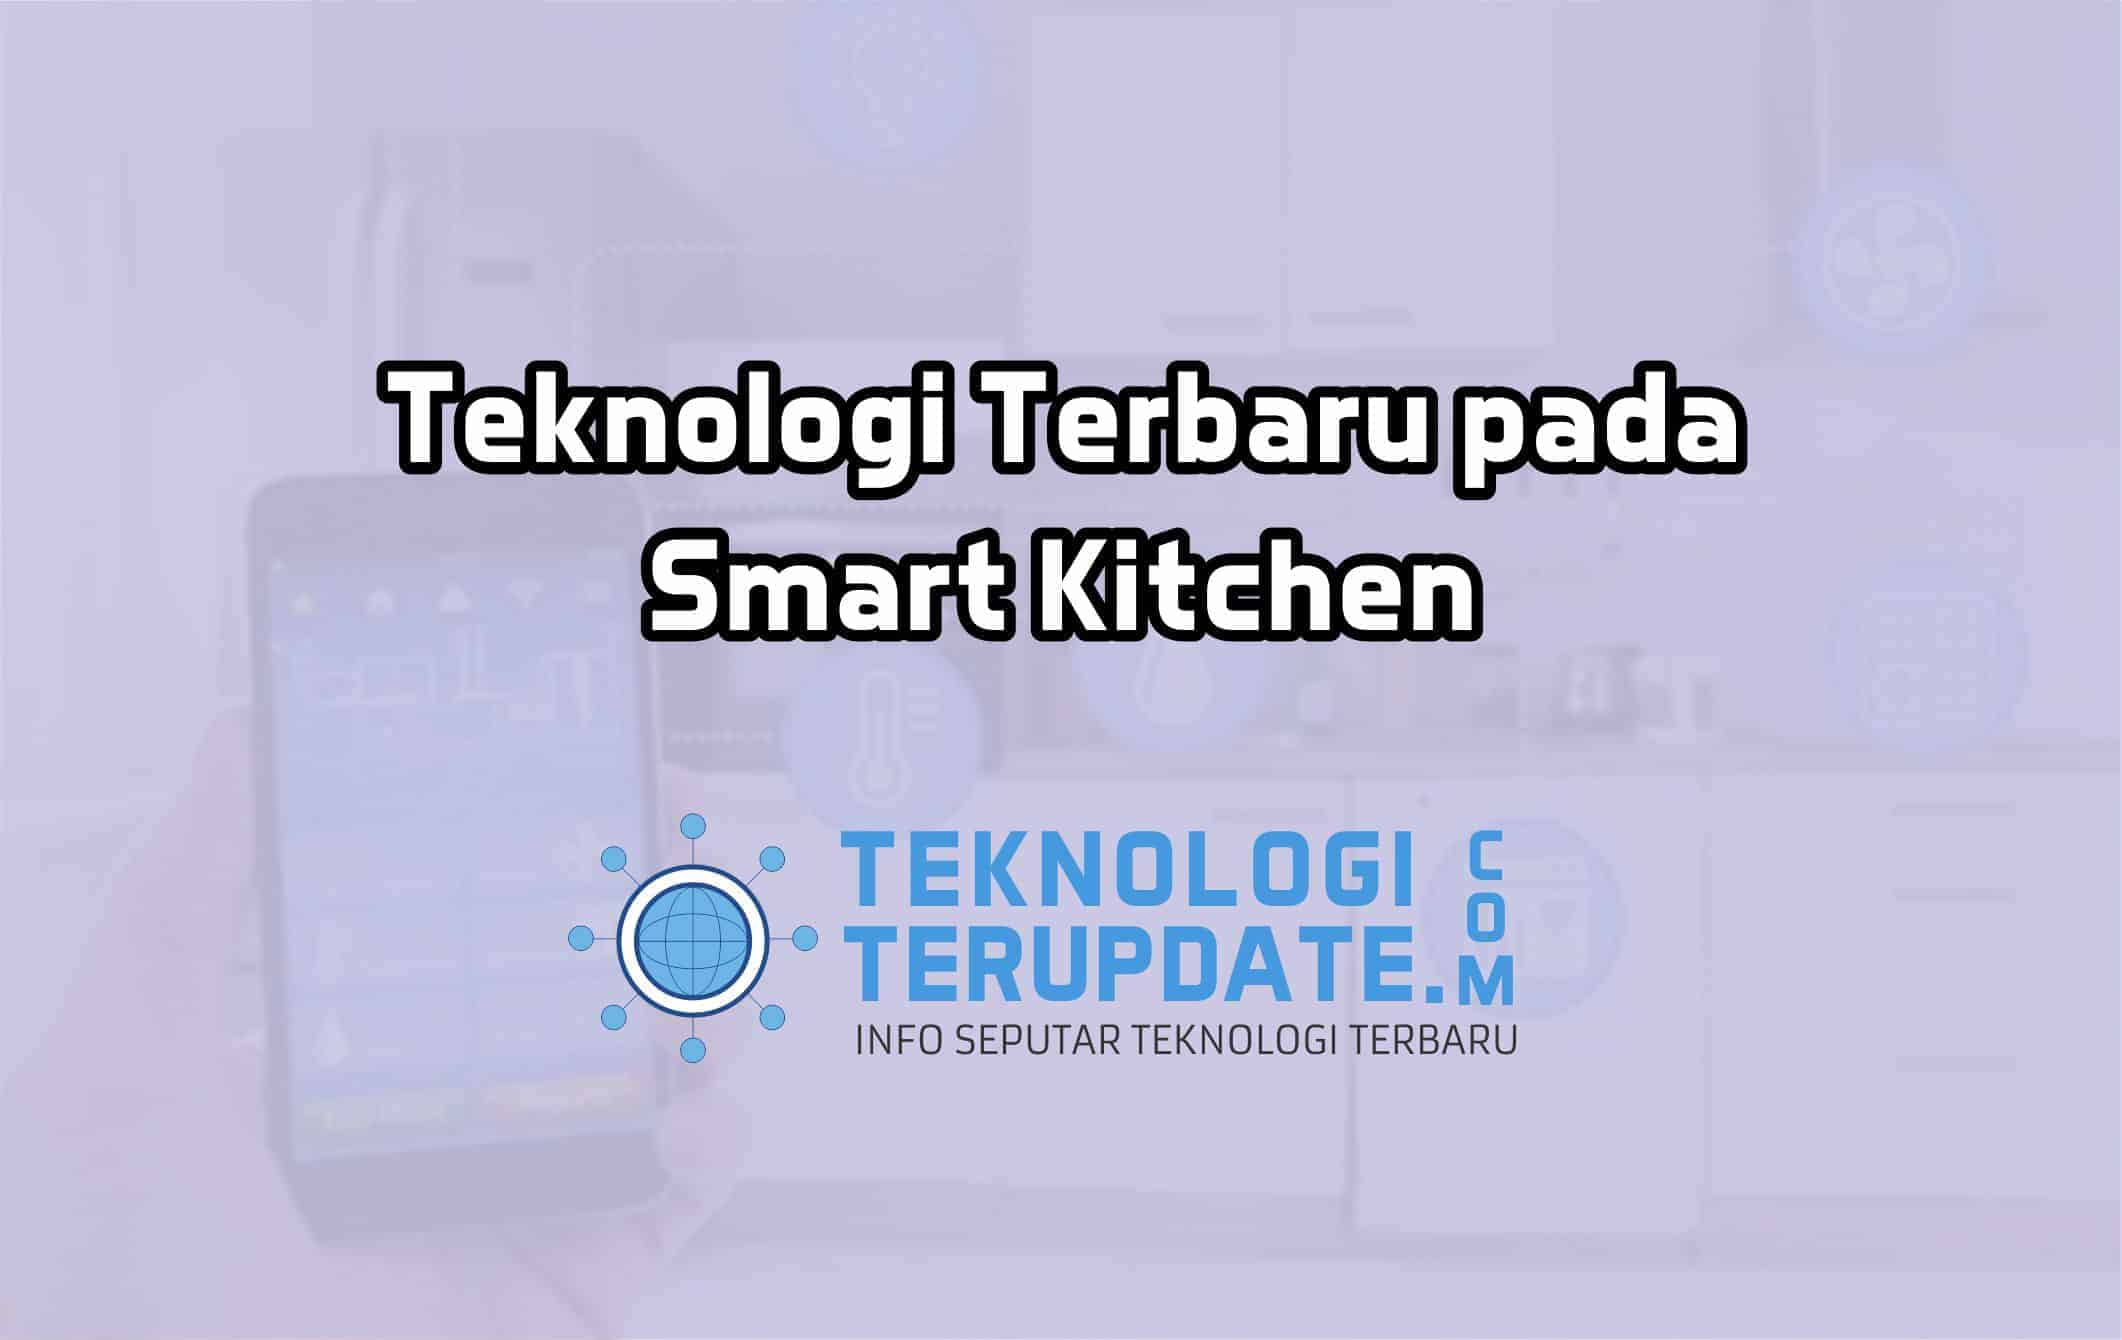 Teknologi Terbaru pada Smart Kitchen